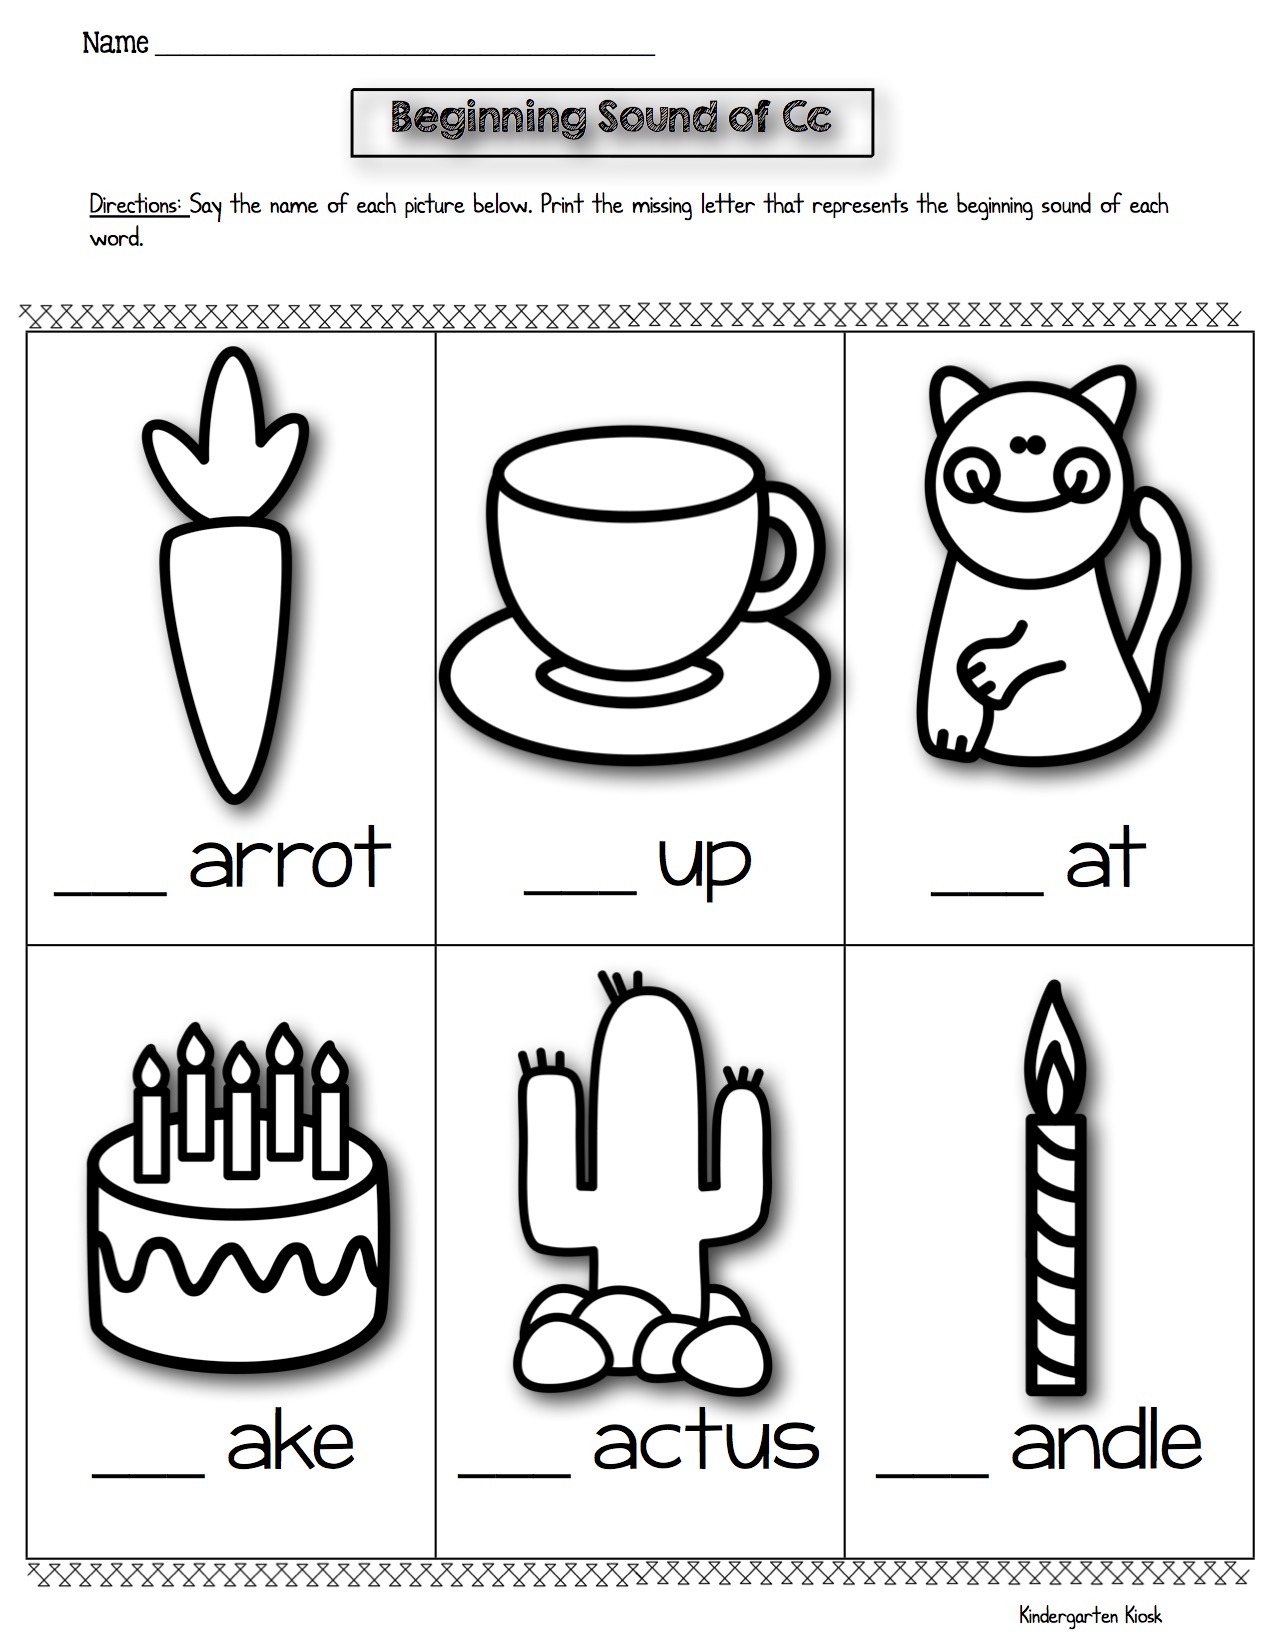 phonics prep alphabet worksheets kindergarten kiosk